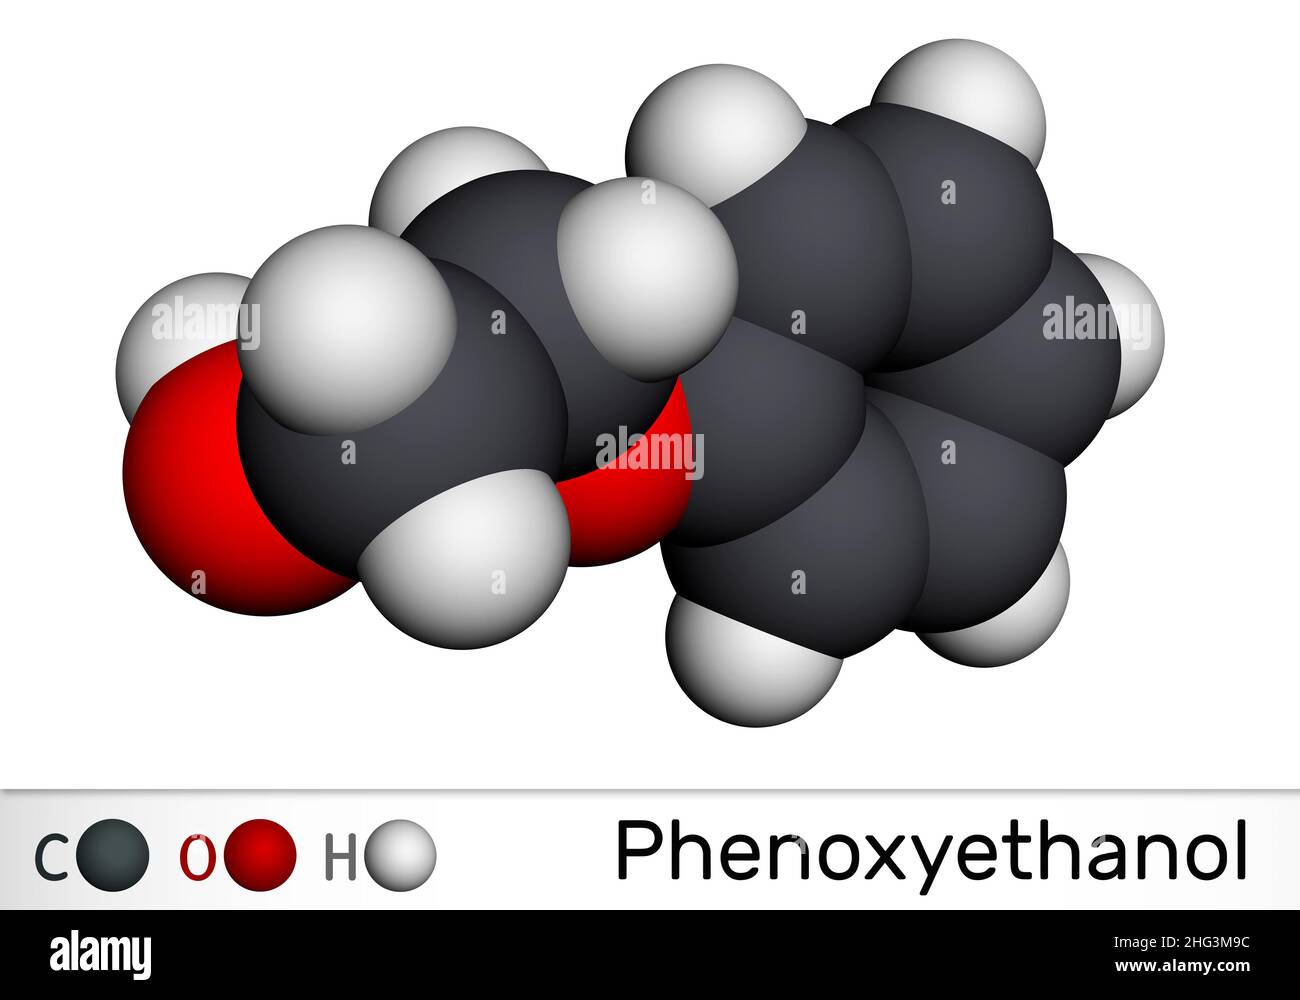 49 Phenoxyethanol Images, Stock Photos, 3D objects, & Vectors